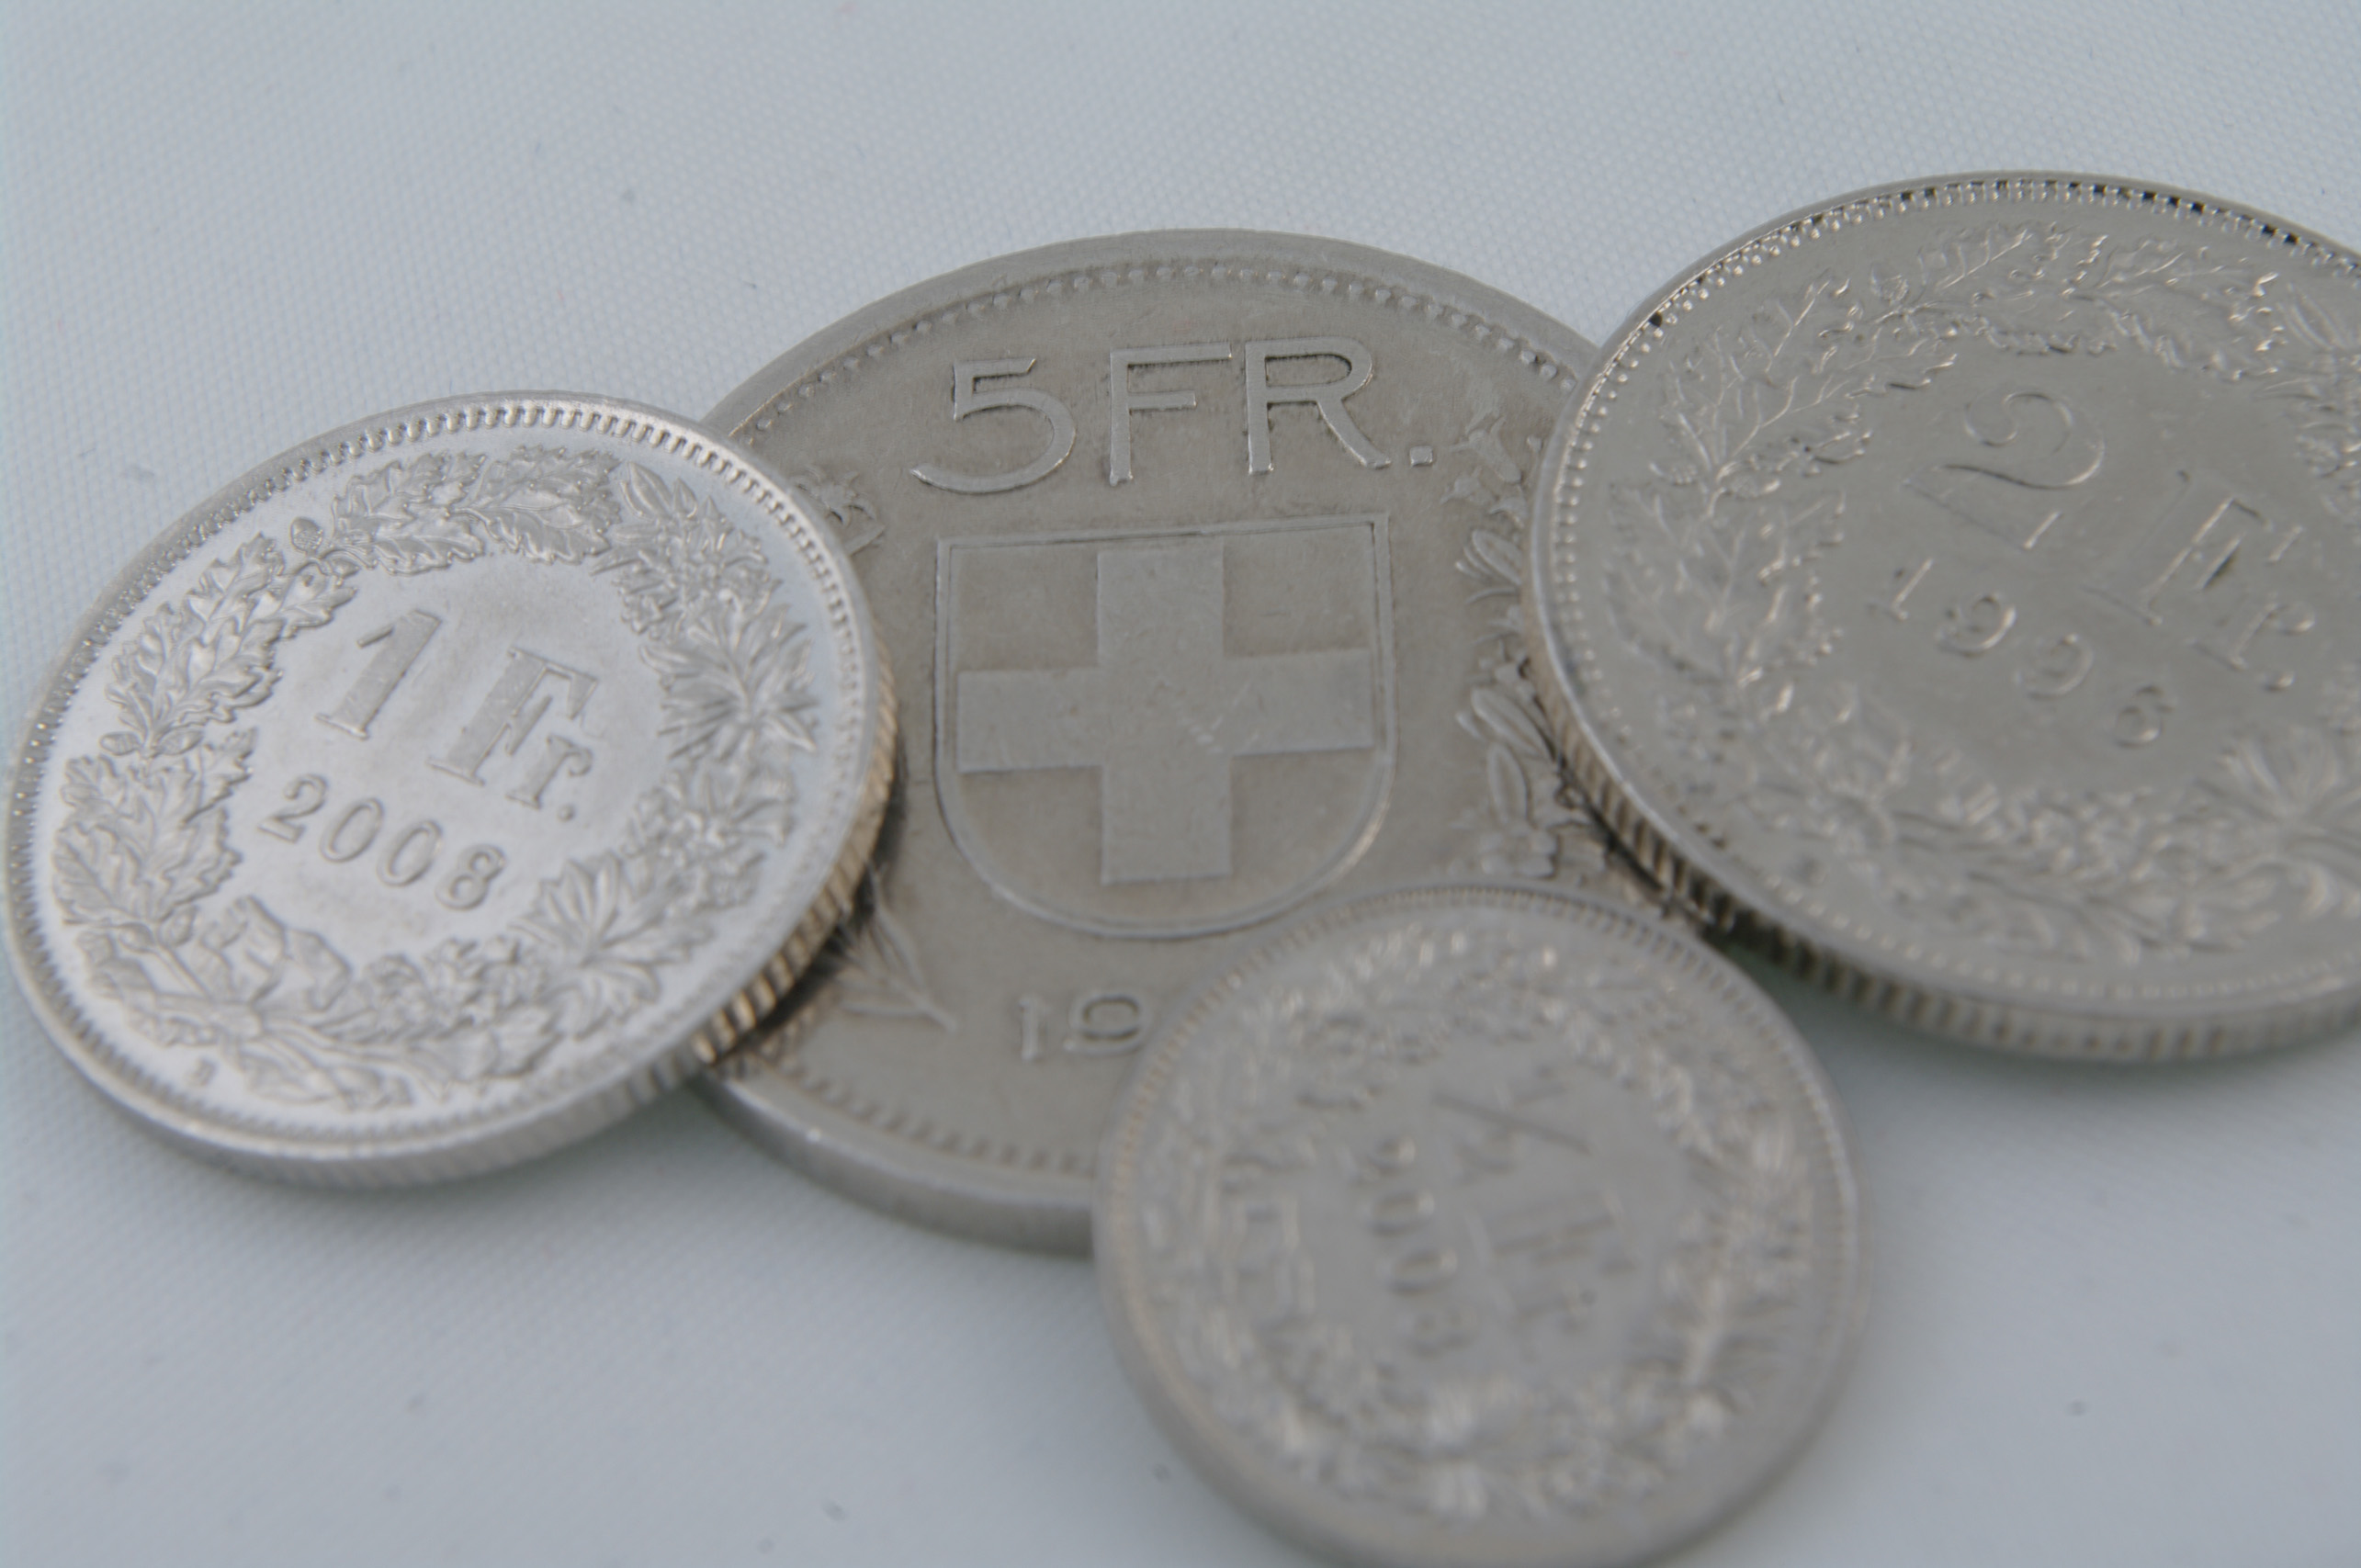 Coins chf switzerland photo